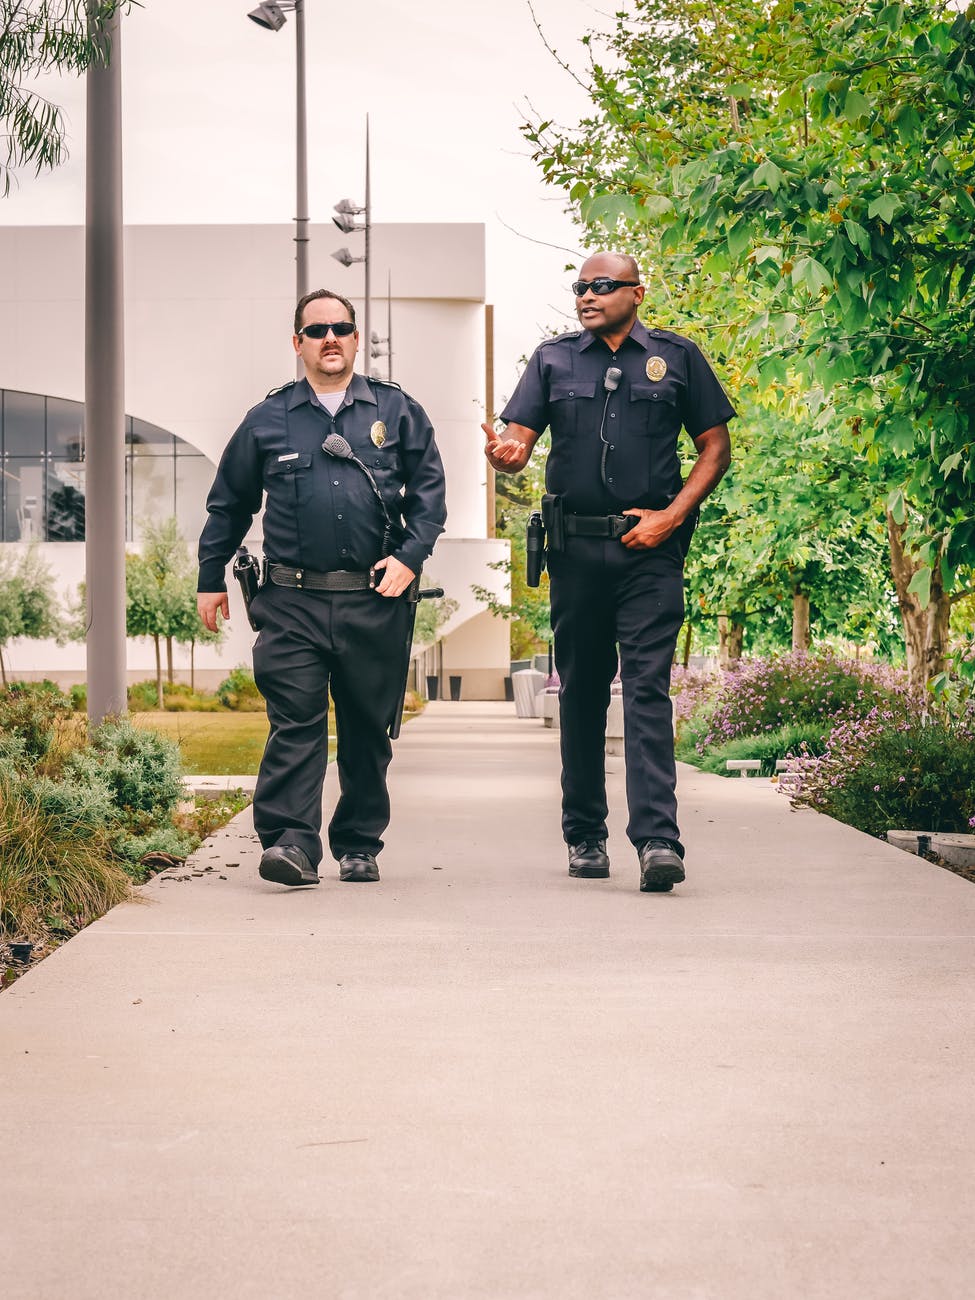 Policemen walking down a pathway | Source: Pexels